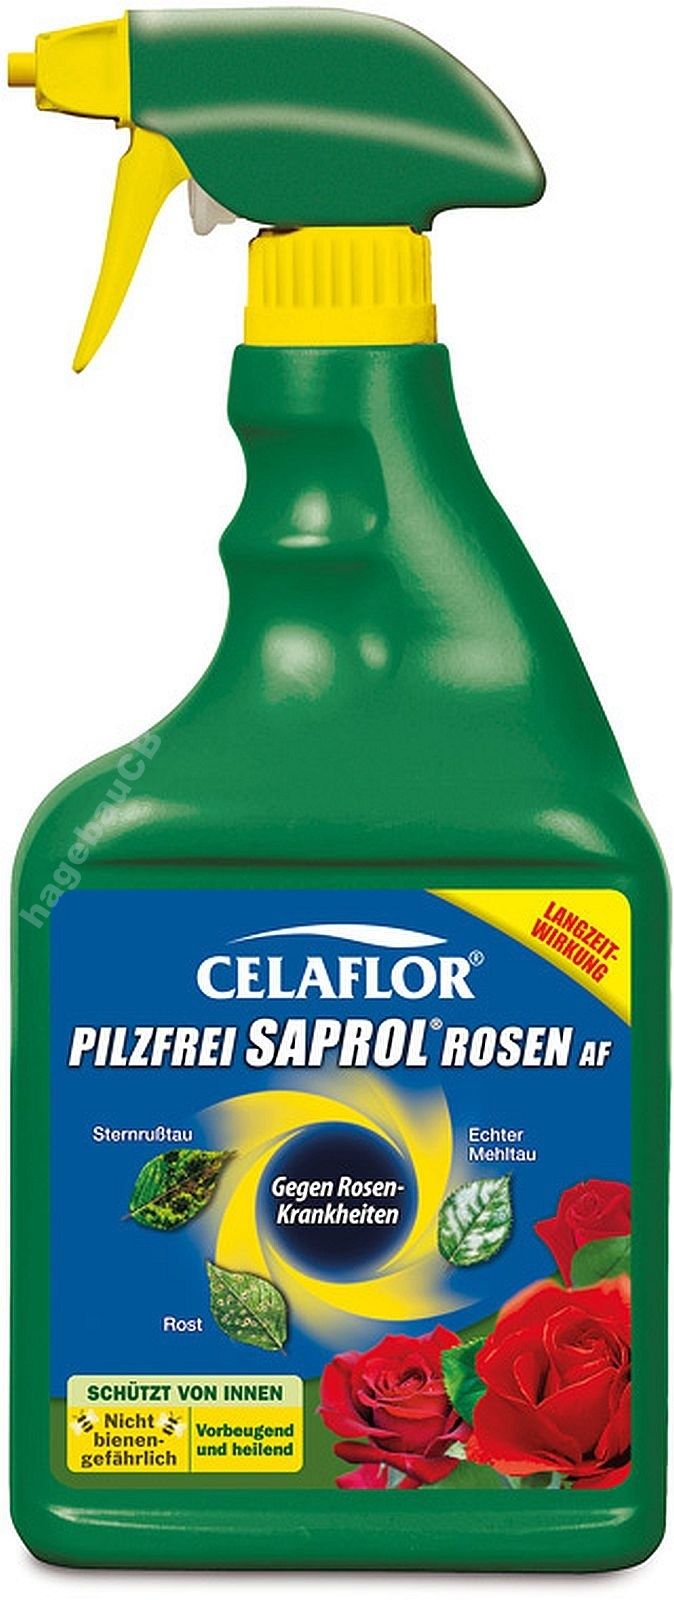 Pilzfrei SAPROL Rosen AF von Celaflor